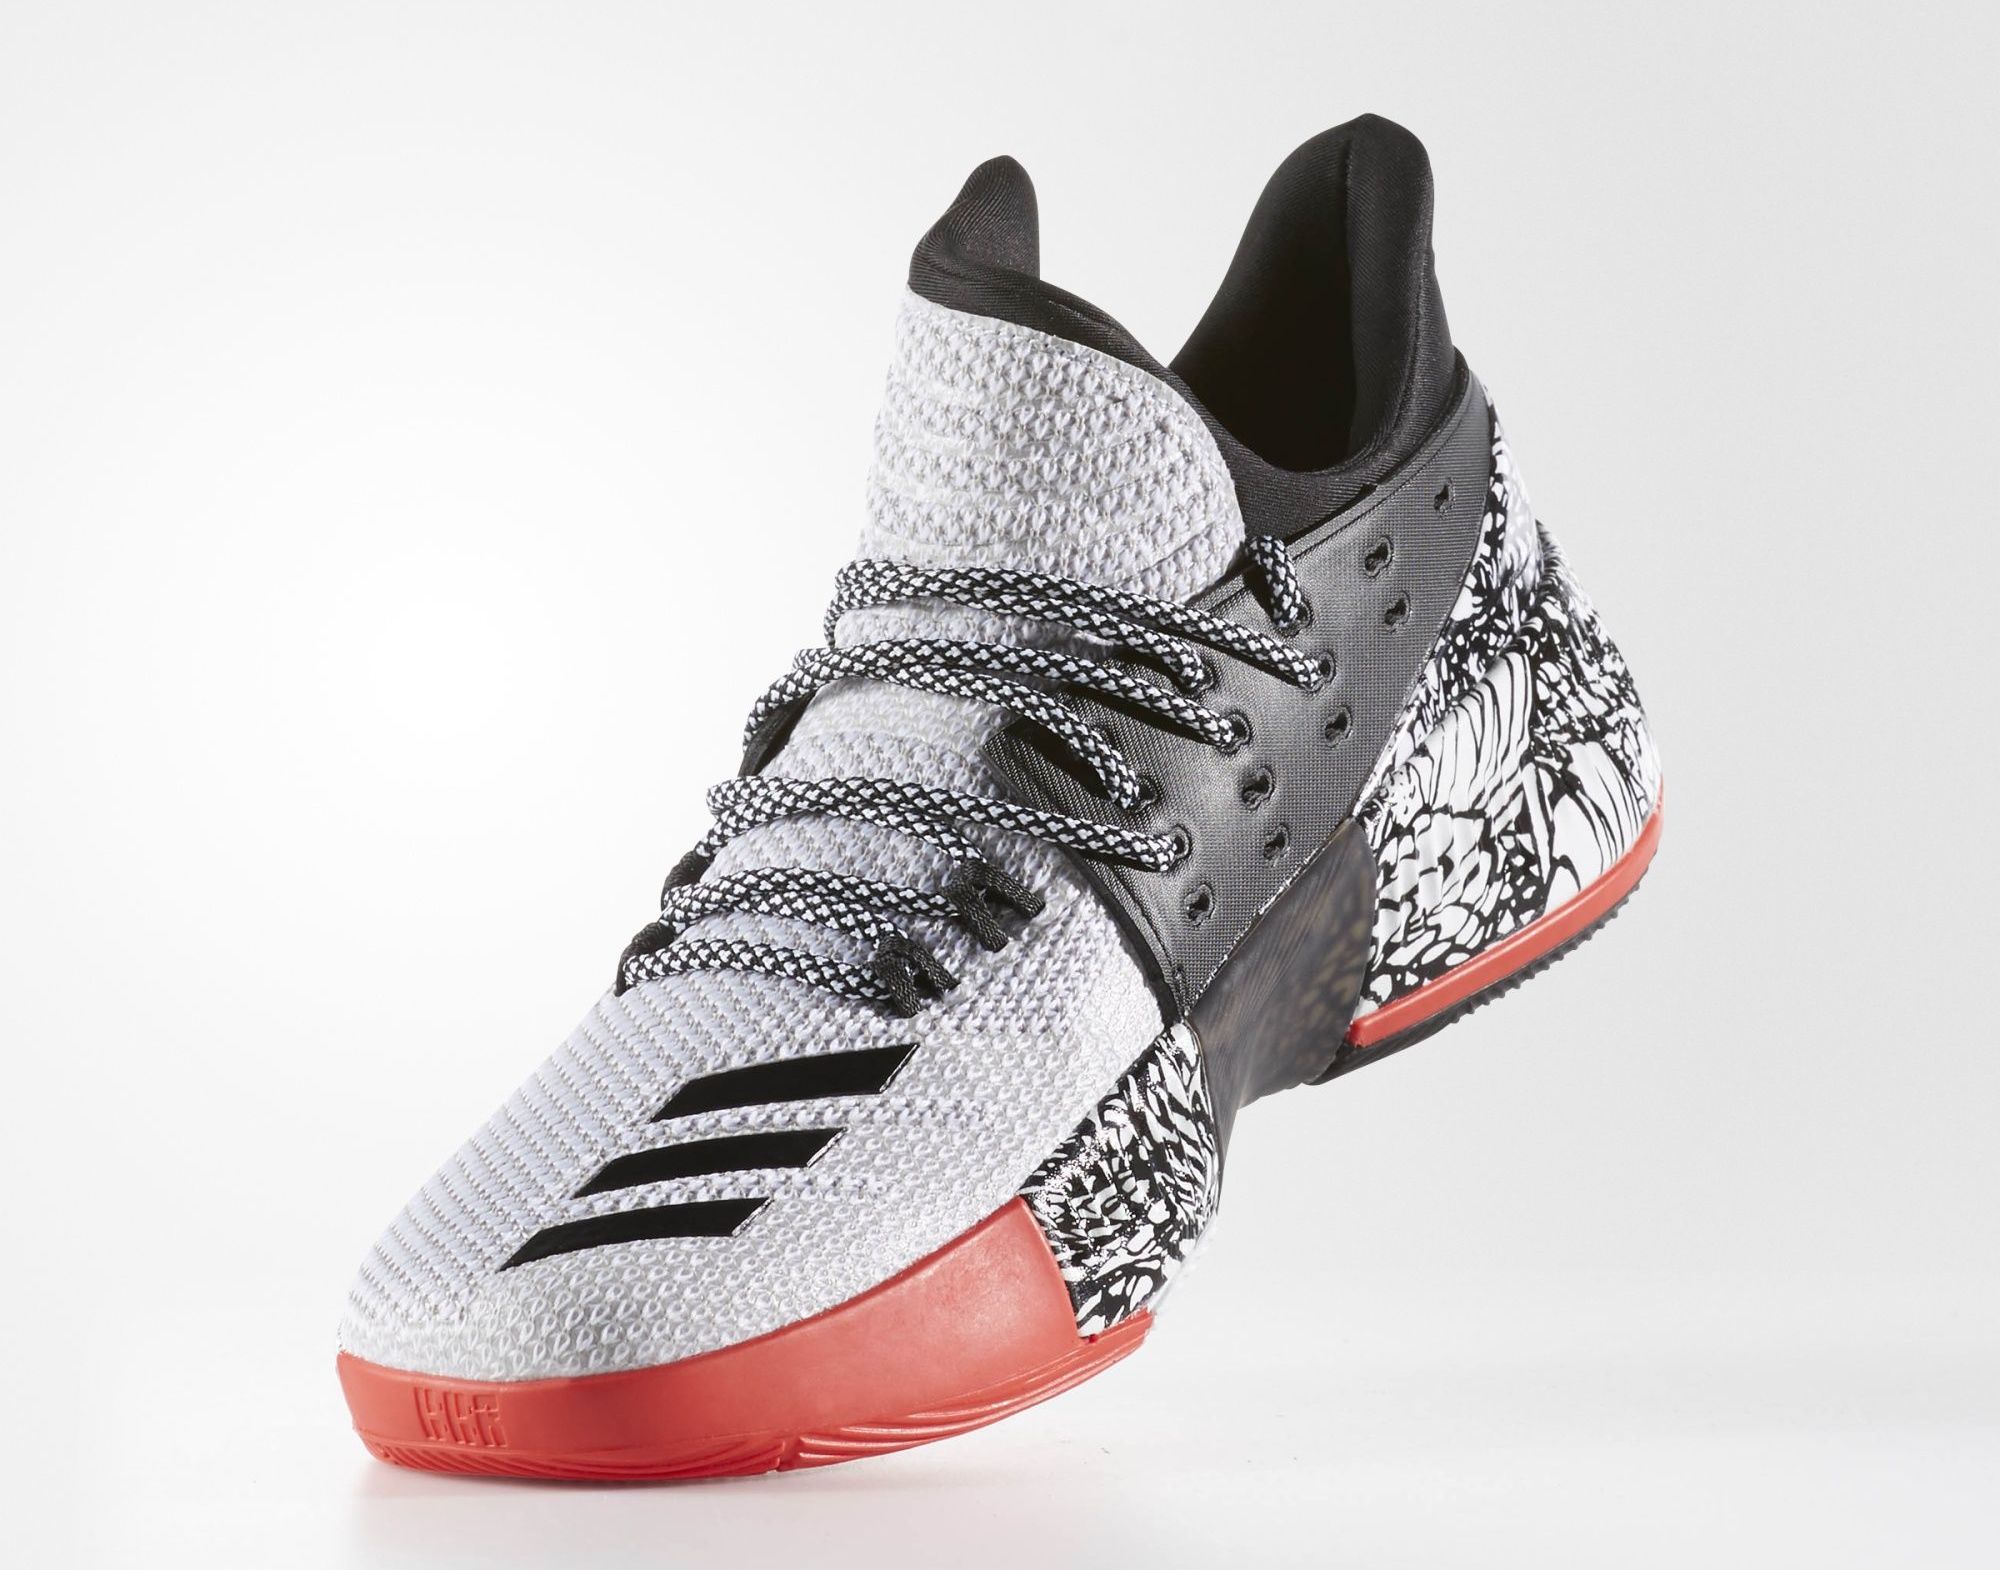 Damian Lillard's Signature Adidas Sneakers Celebrate Chinese New Year |  Complex